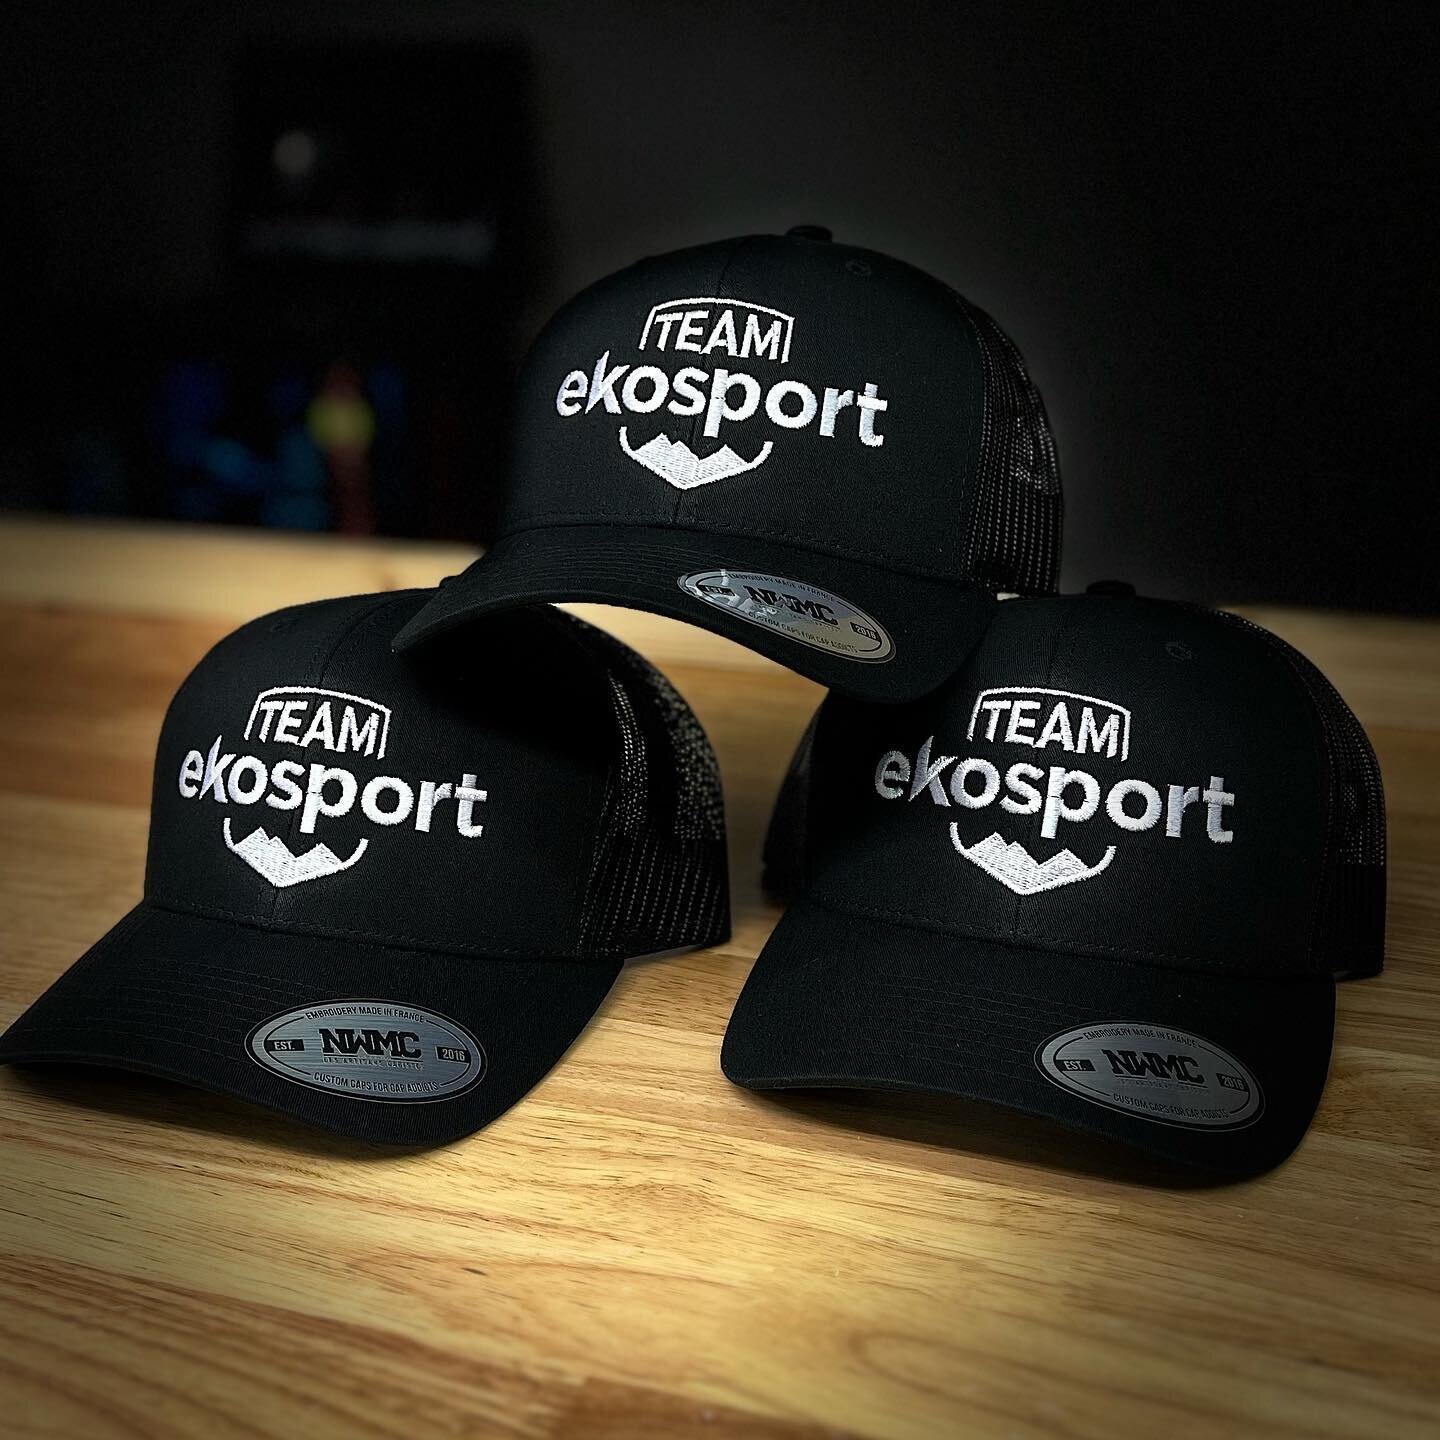 New caps for the Team @ekosport 
.
.
.
.
.
.
.
.
.
#nwmc #lesartisanscapistes #ekosport #sport #web #site #outdoor #shoponline #team #madeinles2alpes